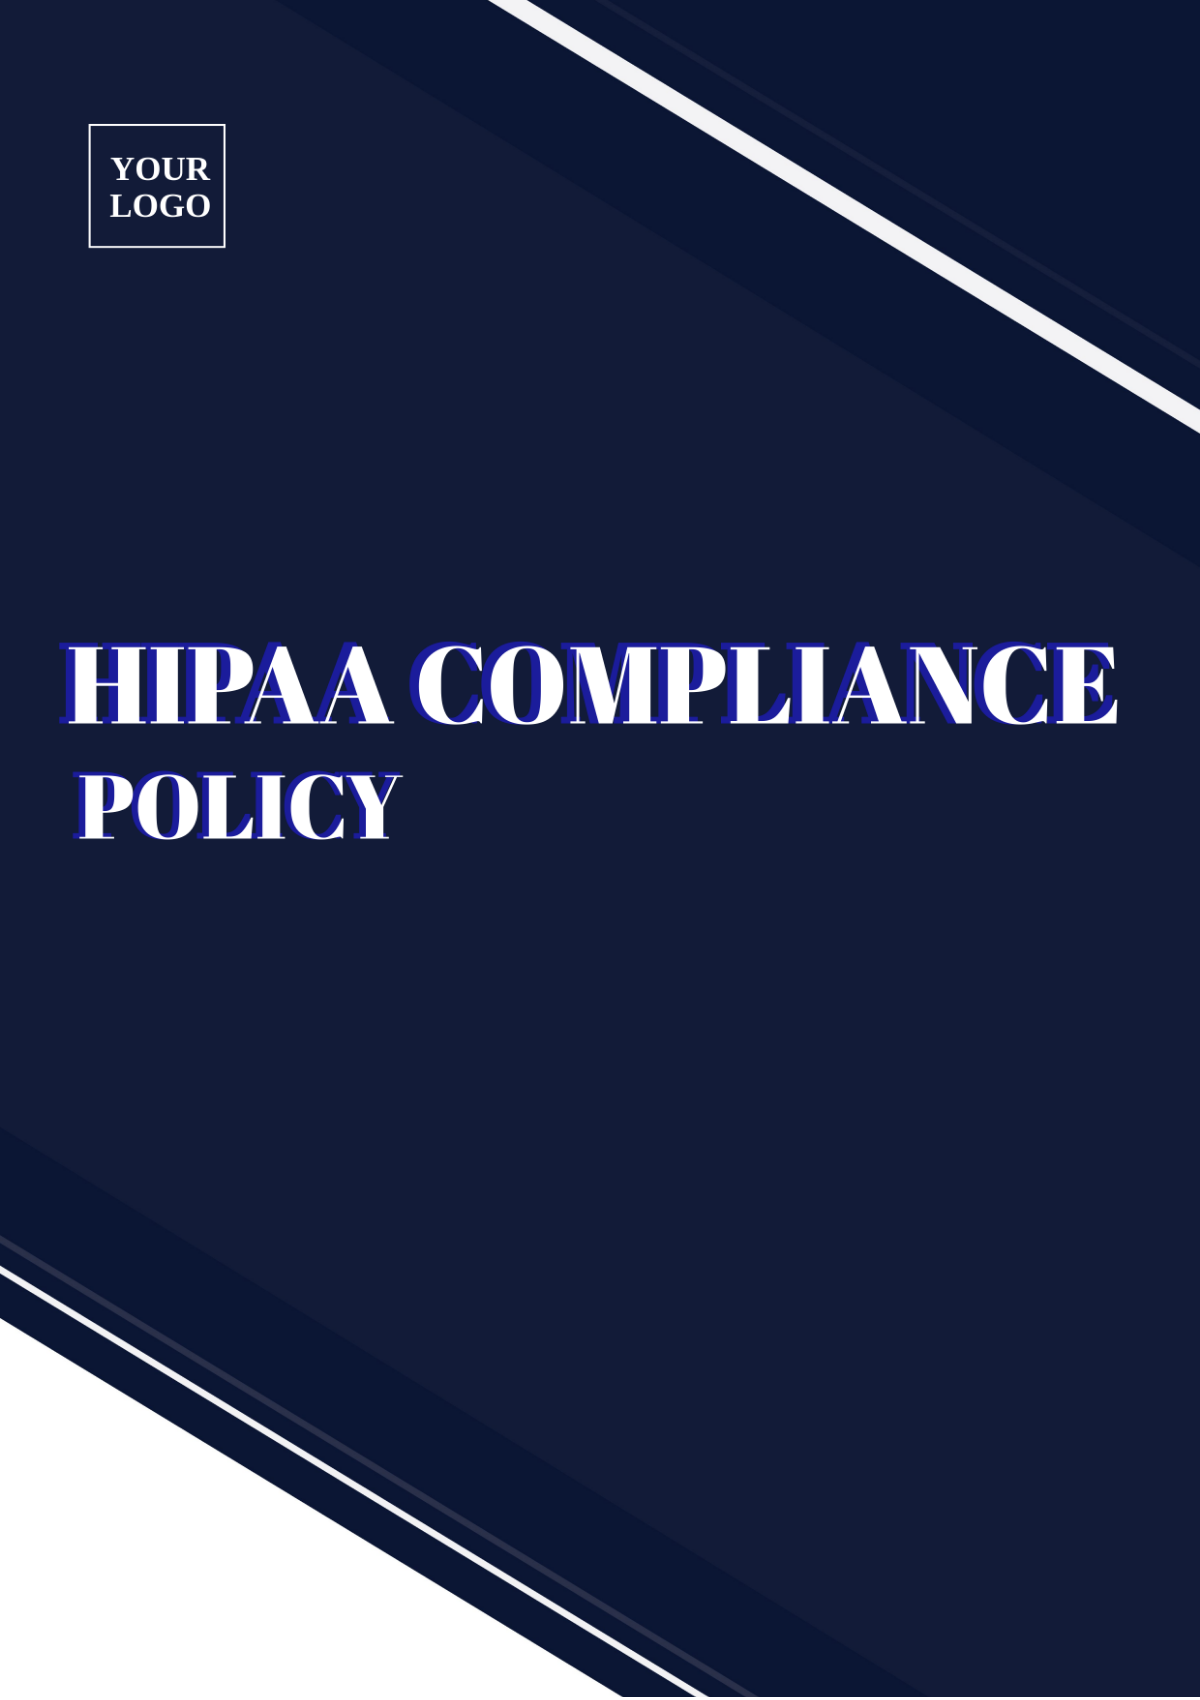 HIPAA Compliance Policy Template